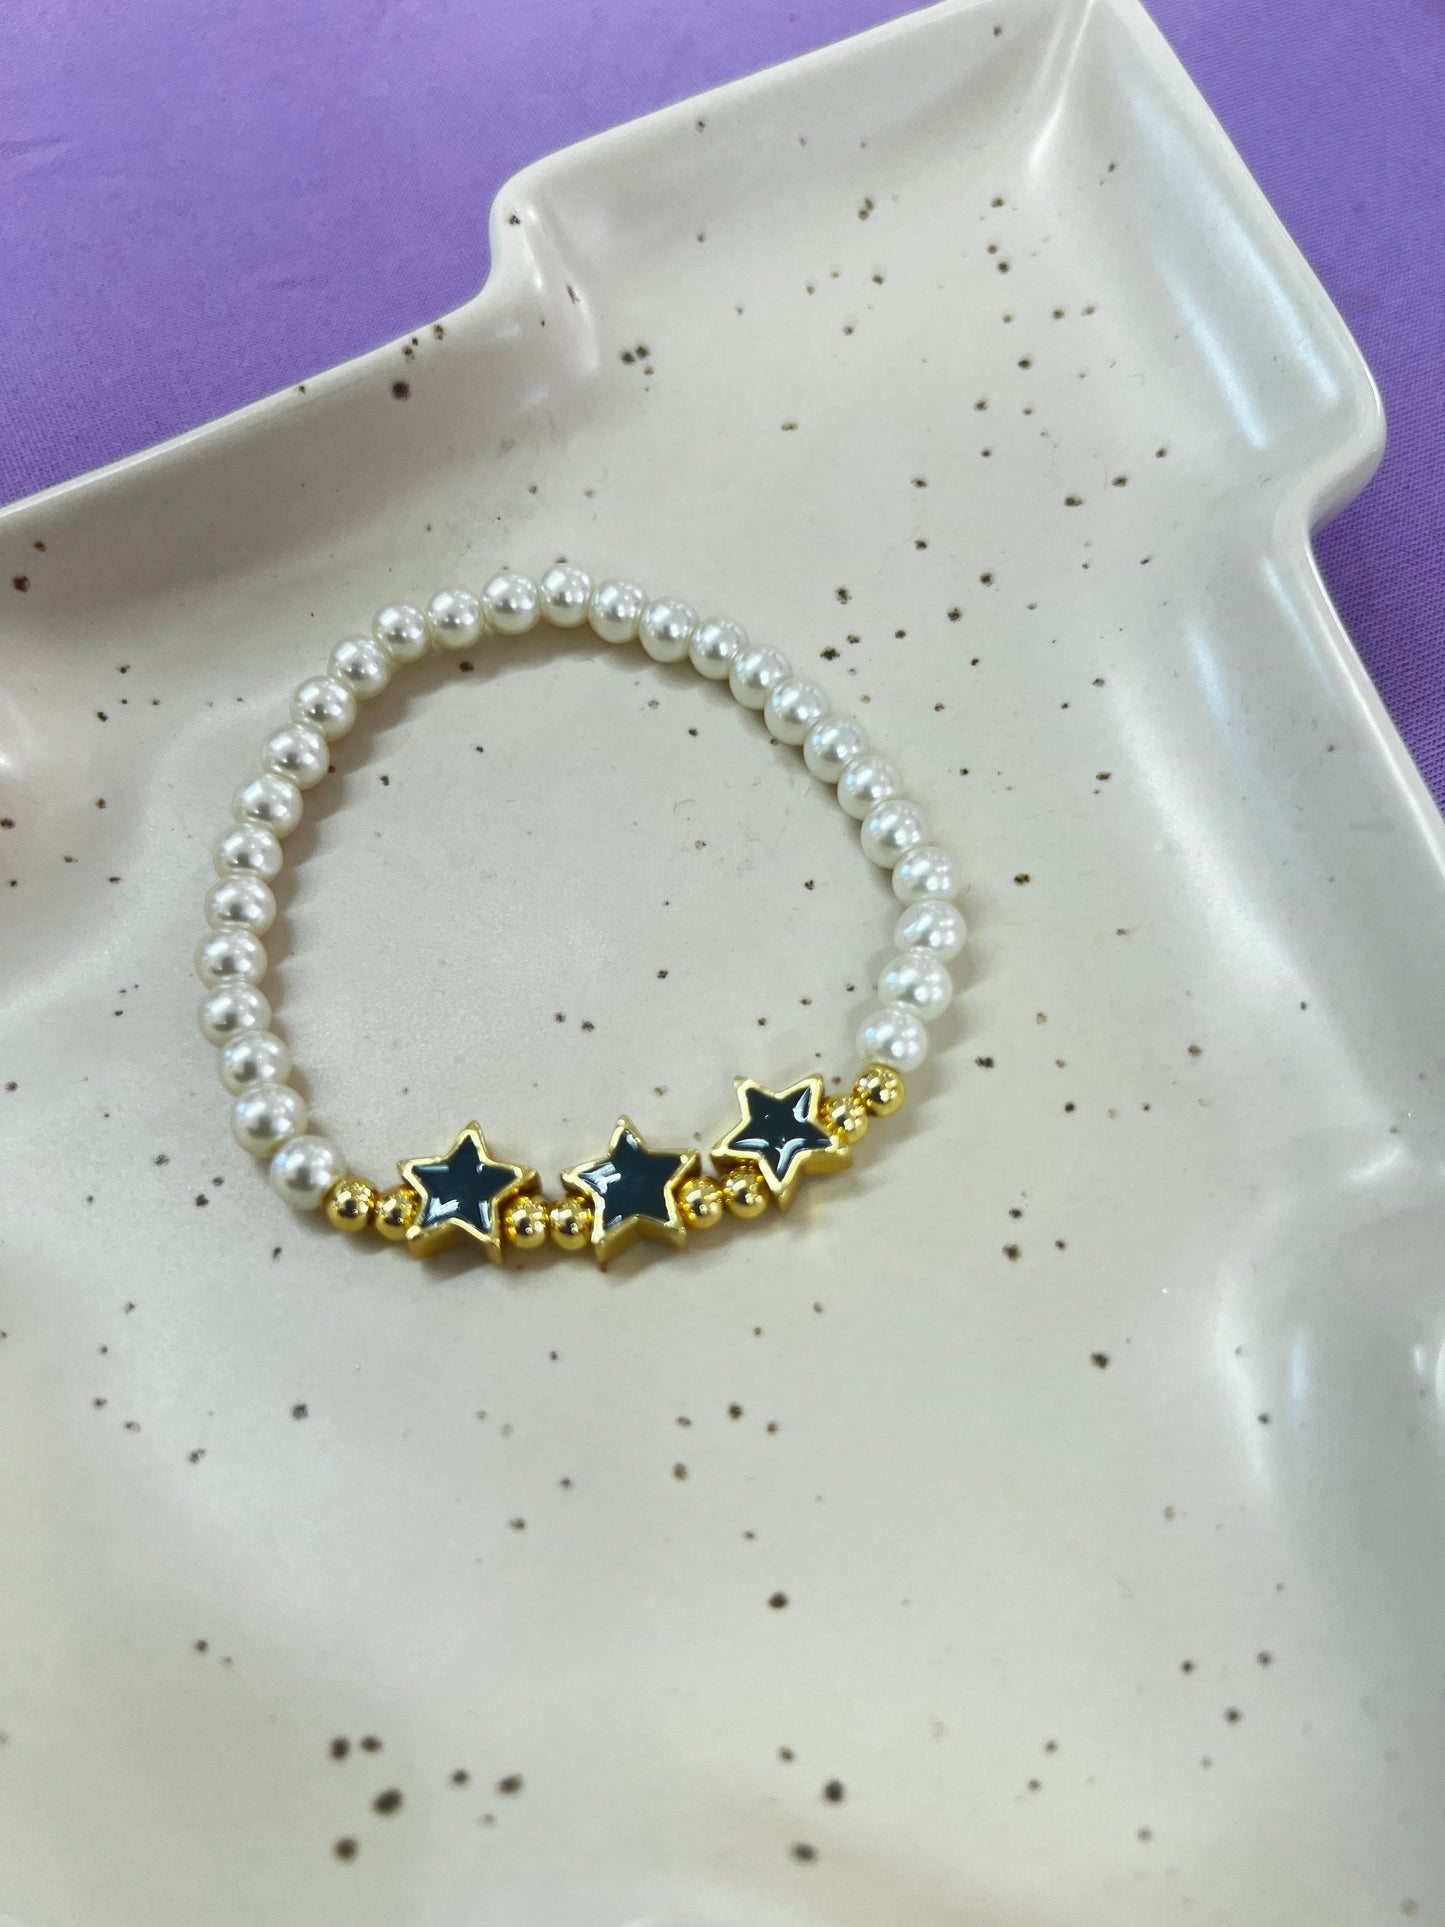 Black stars & pearls bracelet